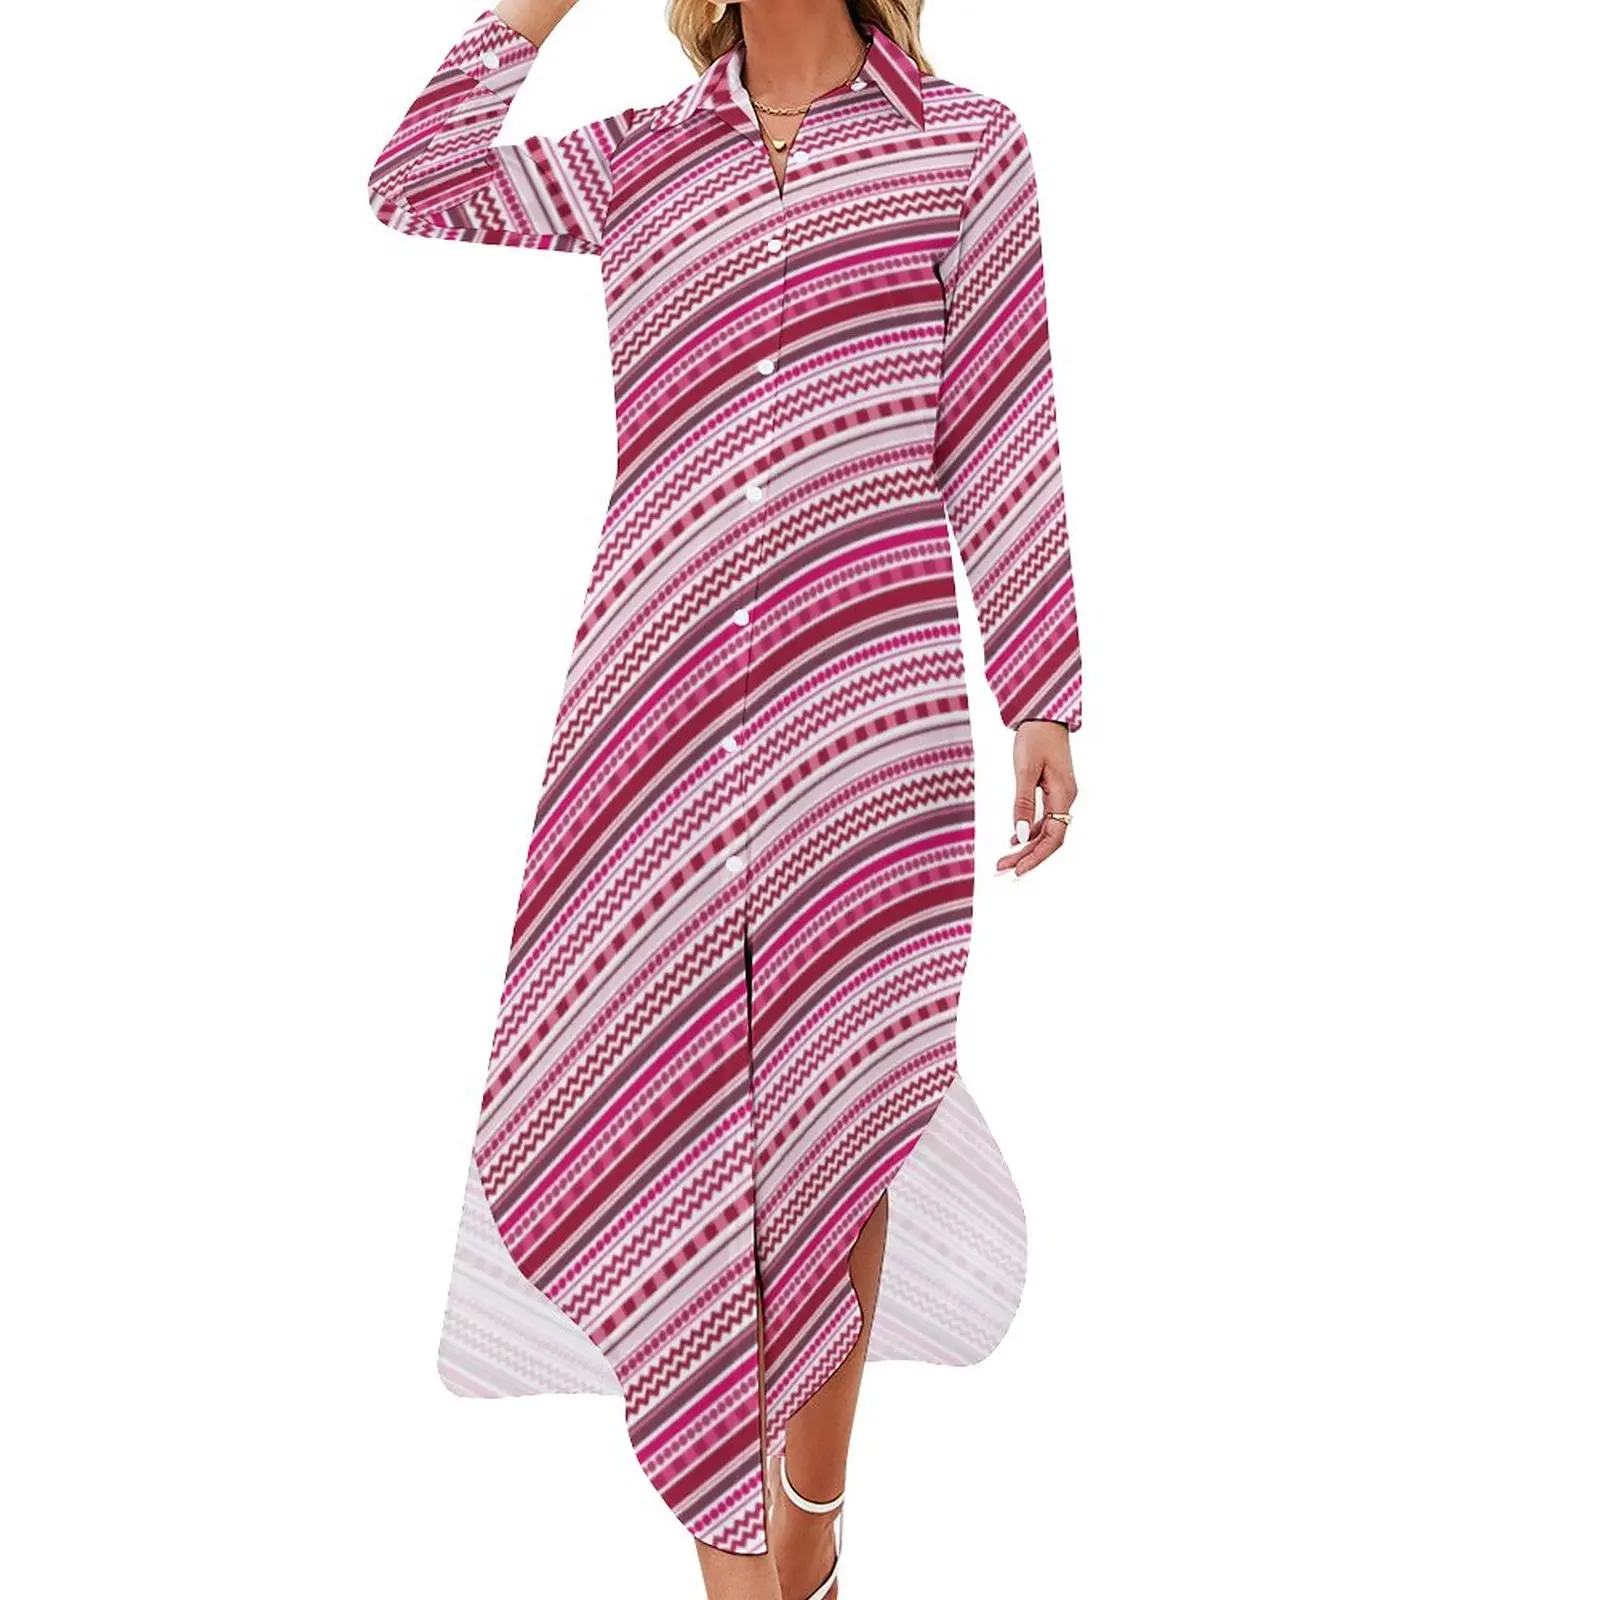 

Pink Dots And Stripes Chiffon Dress Funky Shades Print Elegant Dresses Ladies Long Sleeve Fashion V Neck Big Size Casual Dress